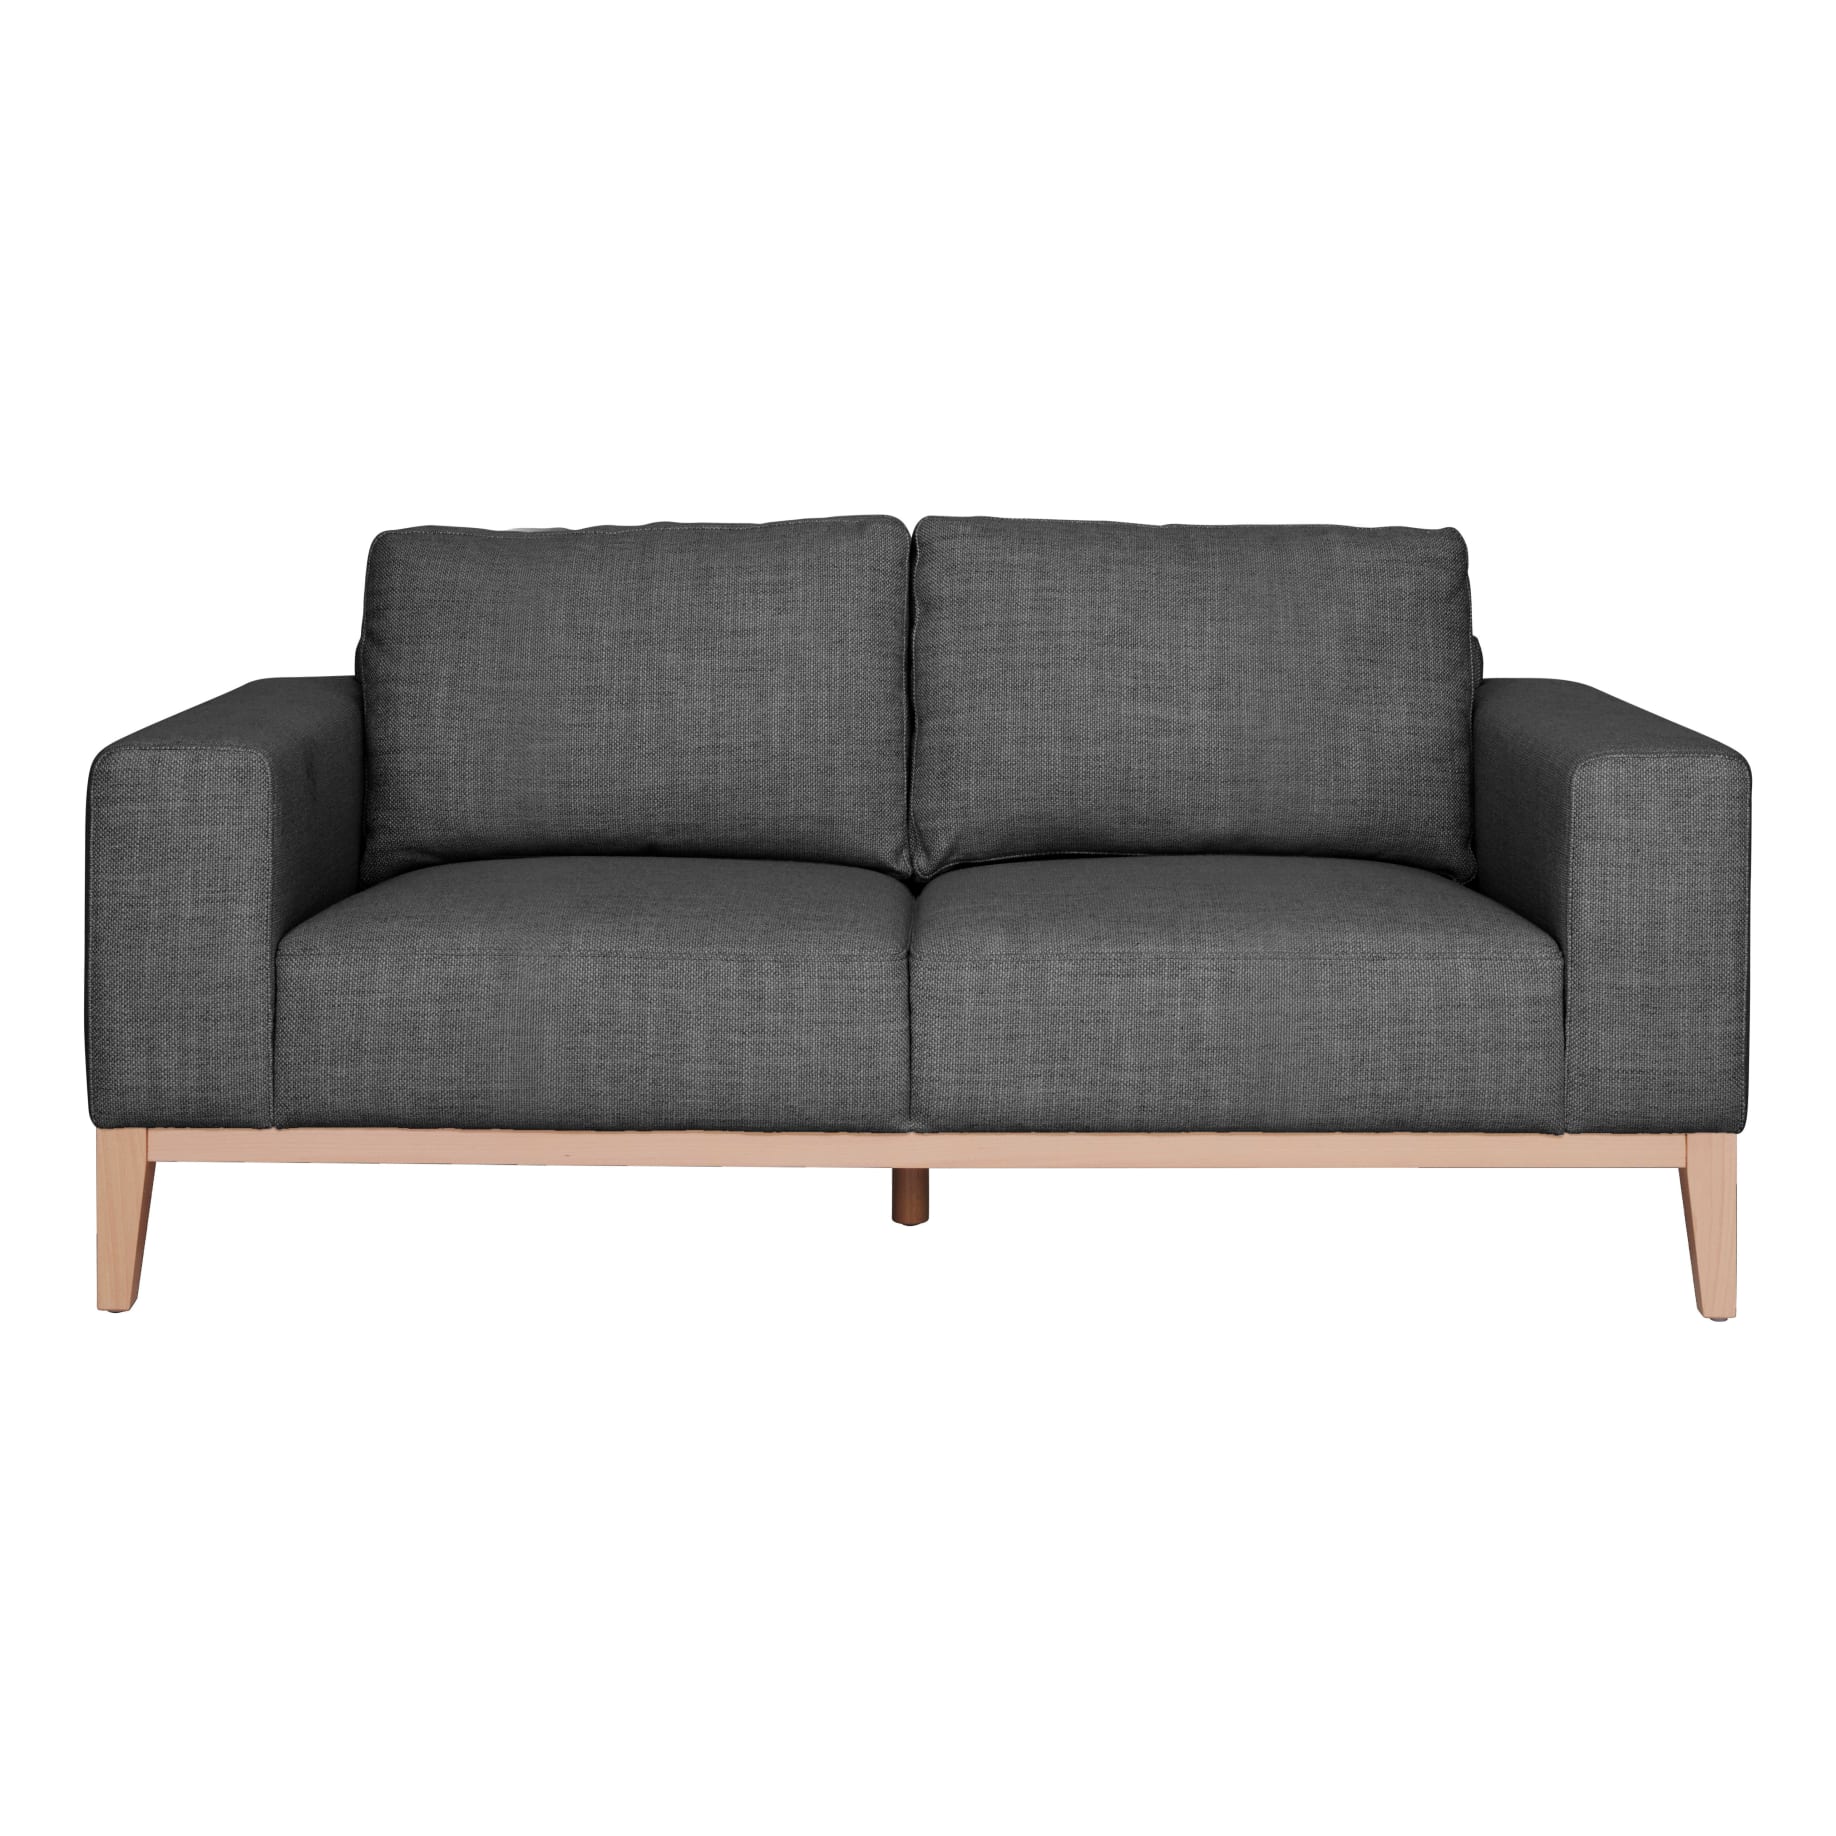 Moana 2 Seater Sofa in Kind Charcoal